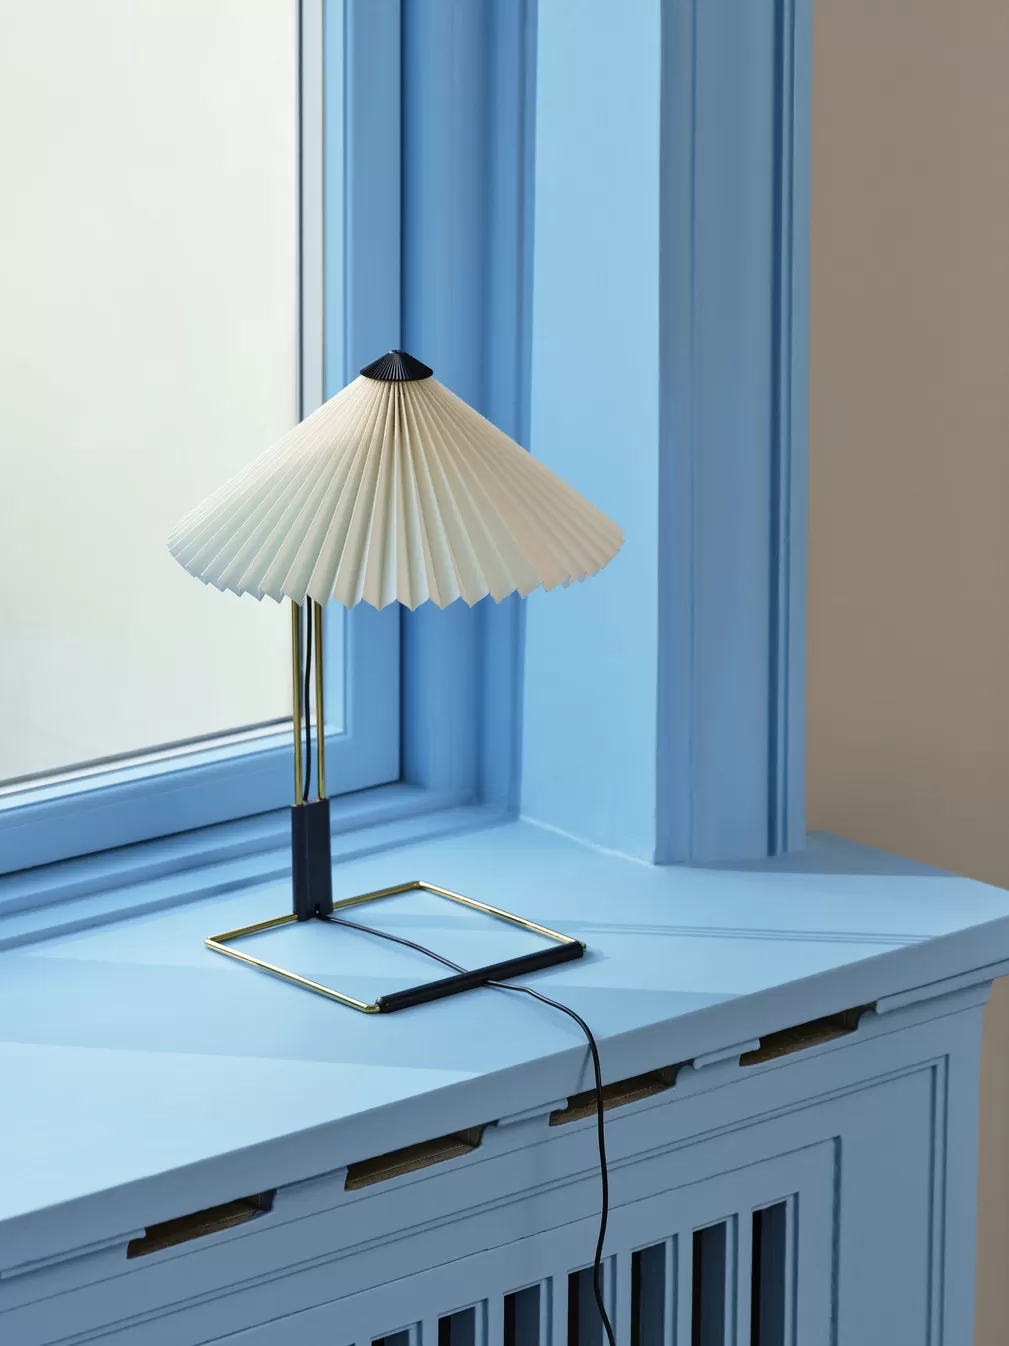 MATIN TABLE LAMP | Herman miller